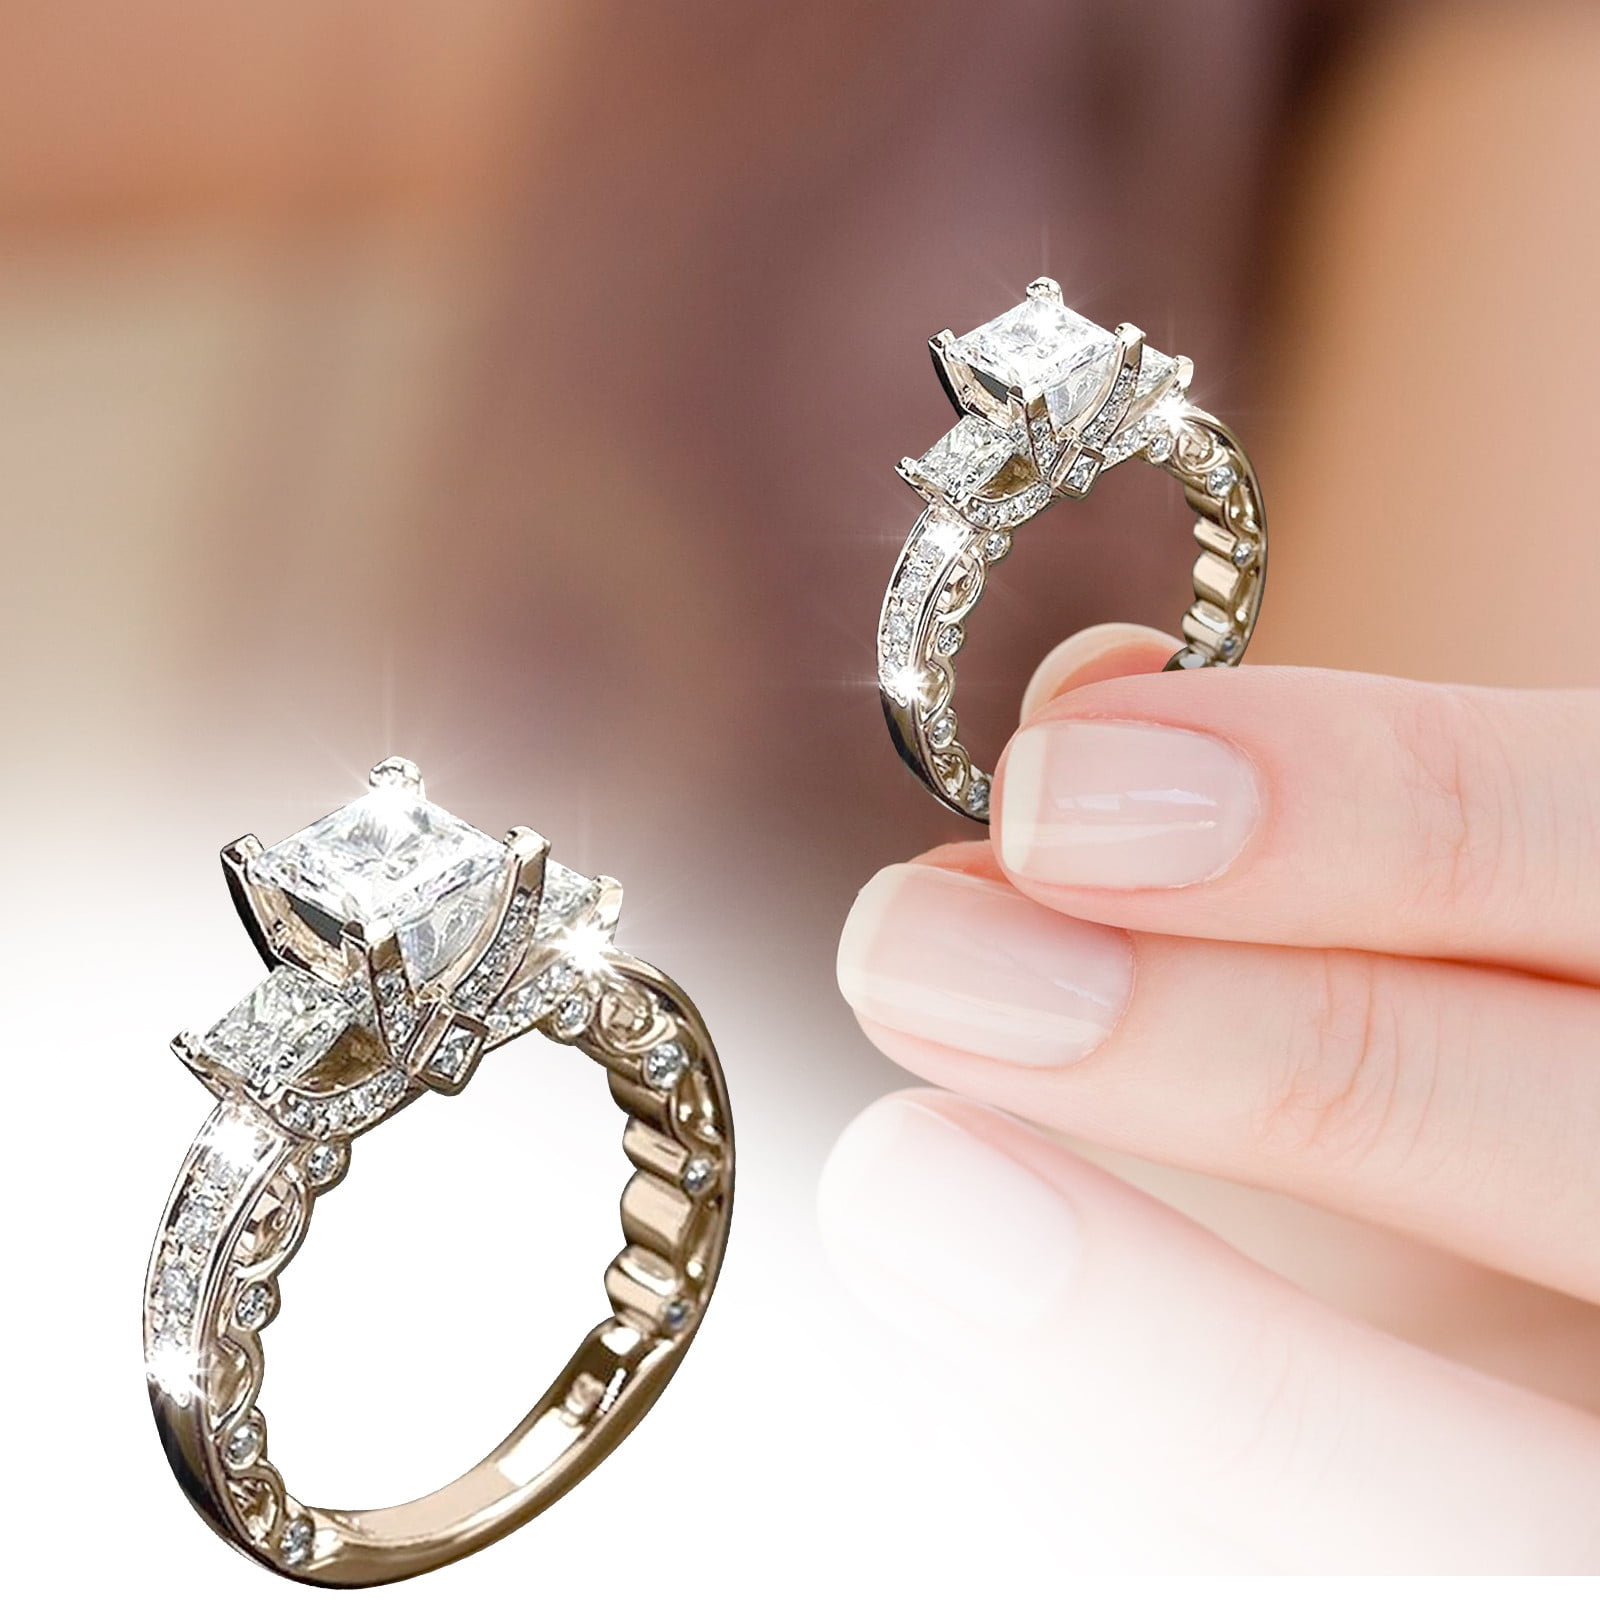 Stylish rings for girls 3D model 3D printable | CGTrader